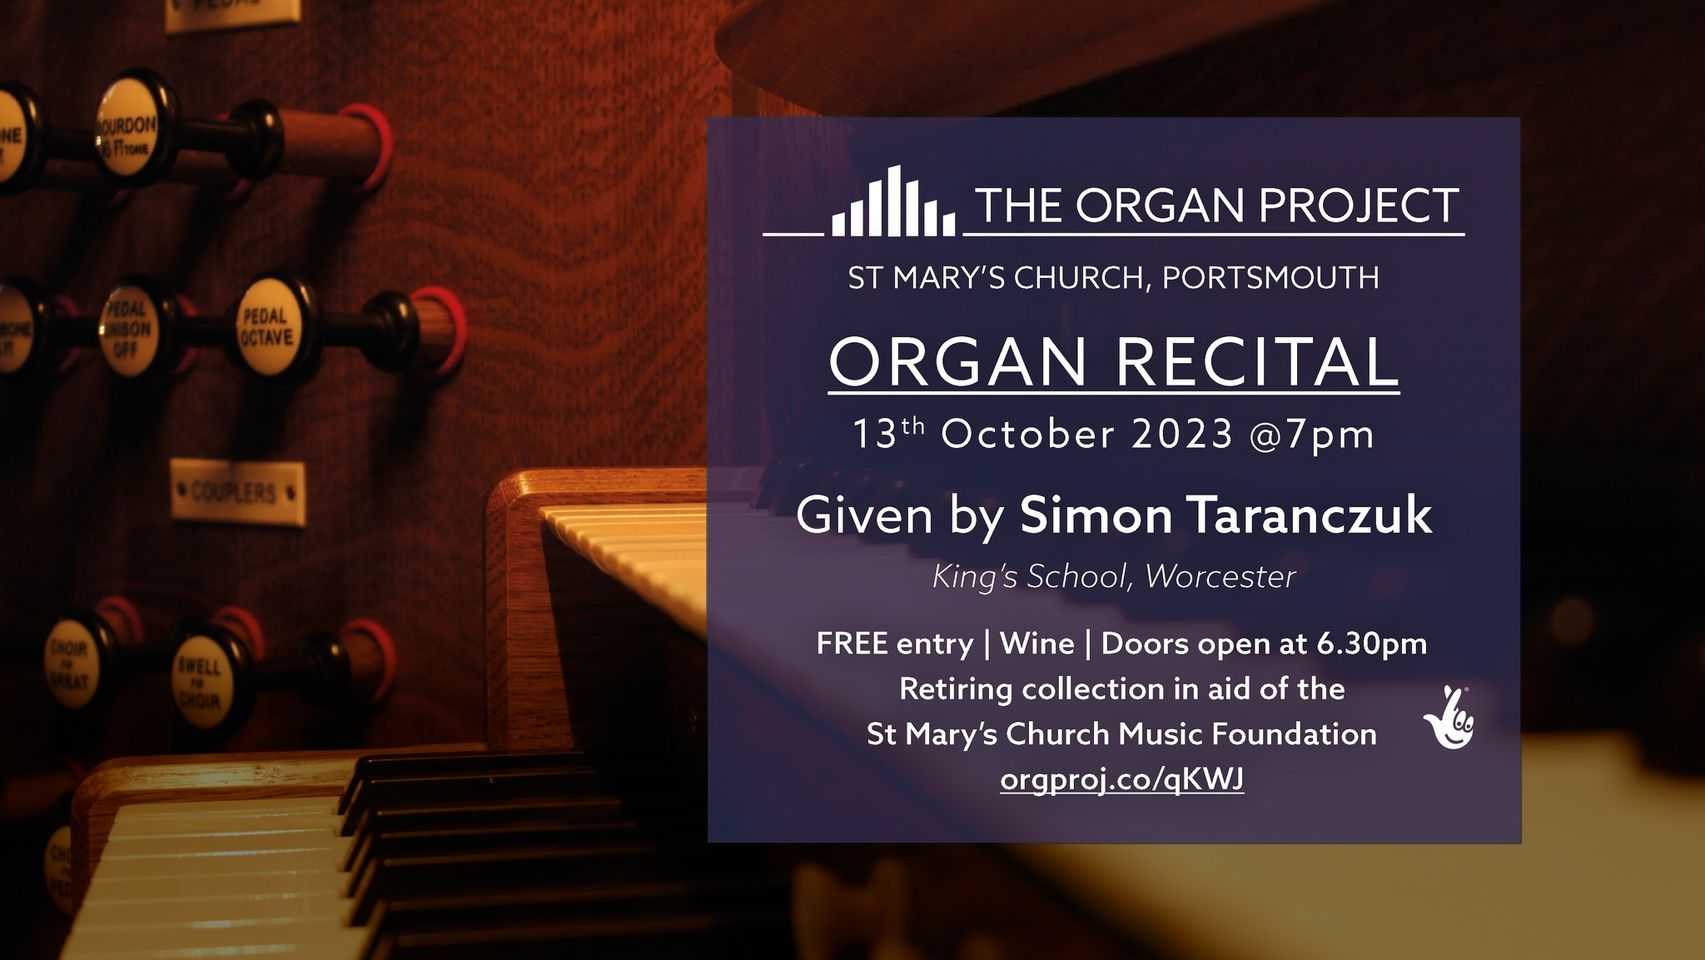 Advert for The Organ Project recital with Simon Taranczuk